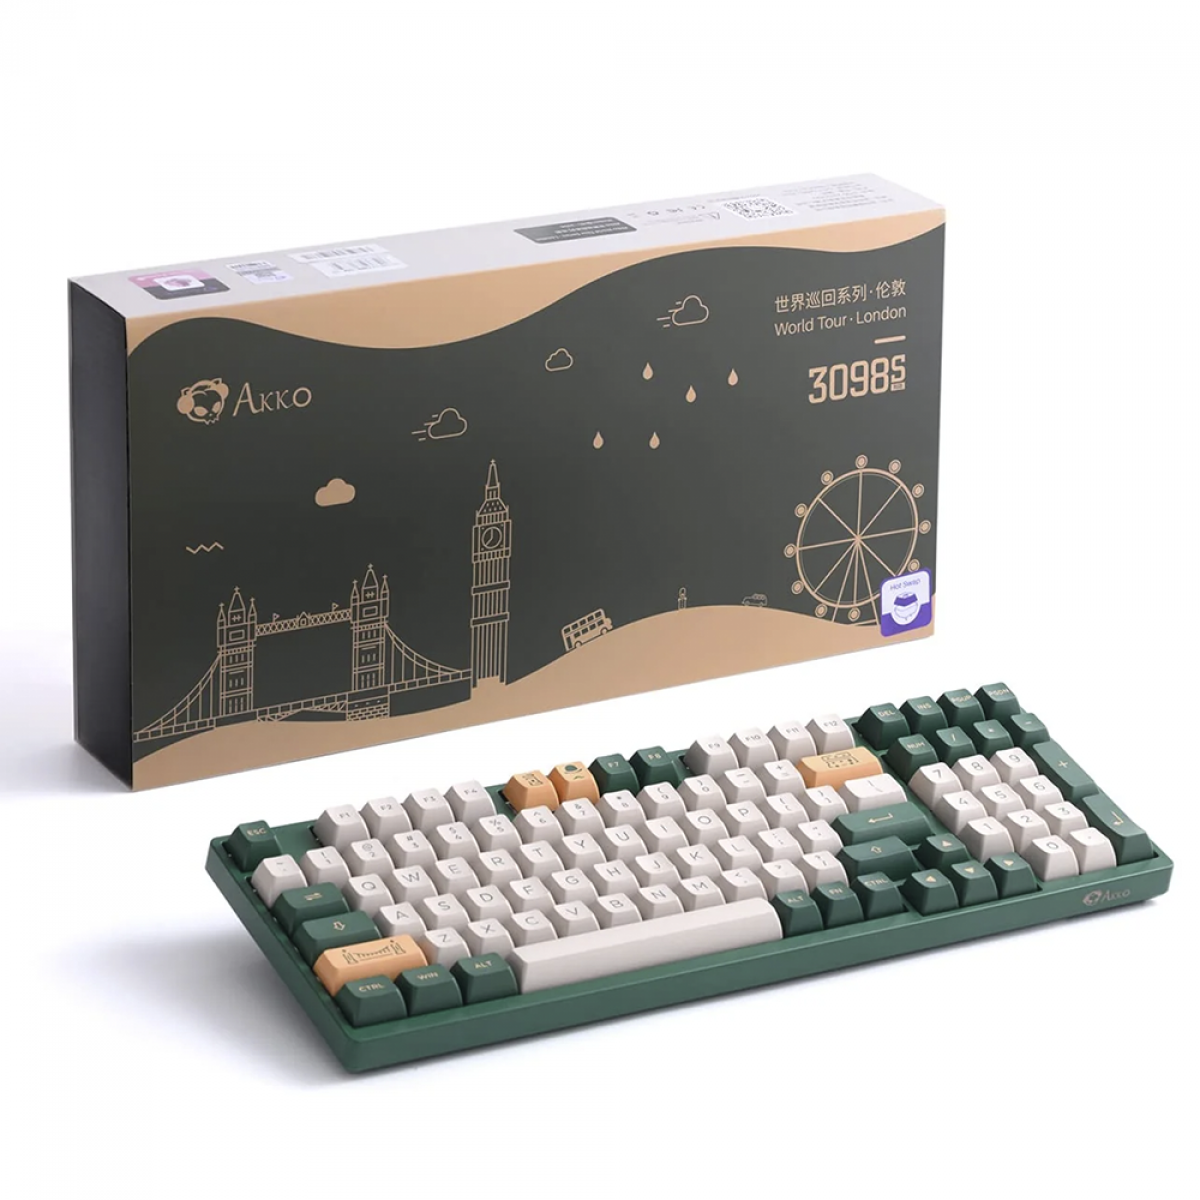 Akko Keyboard 3098S コンゴウ ラベンダーパープル